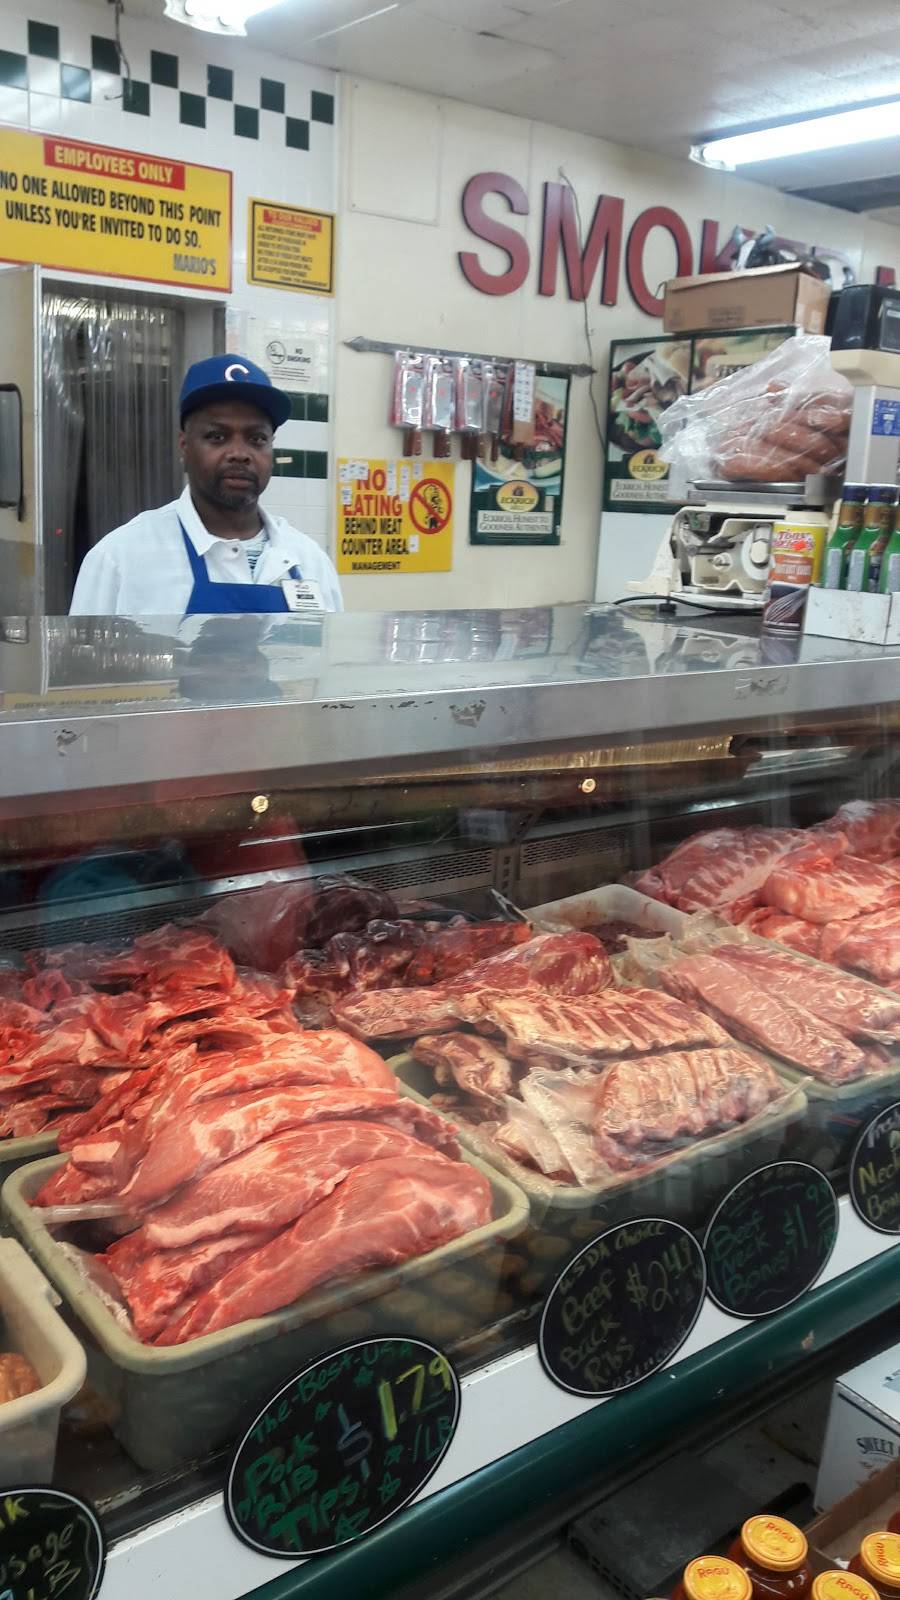 Marios Butcher Shop & Food | 5817 W Madison St, Chicago, IL 60644, USA | Phone: (773) 379-7757